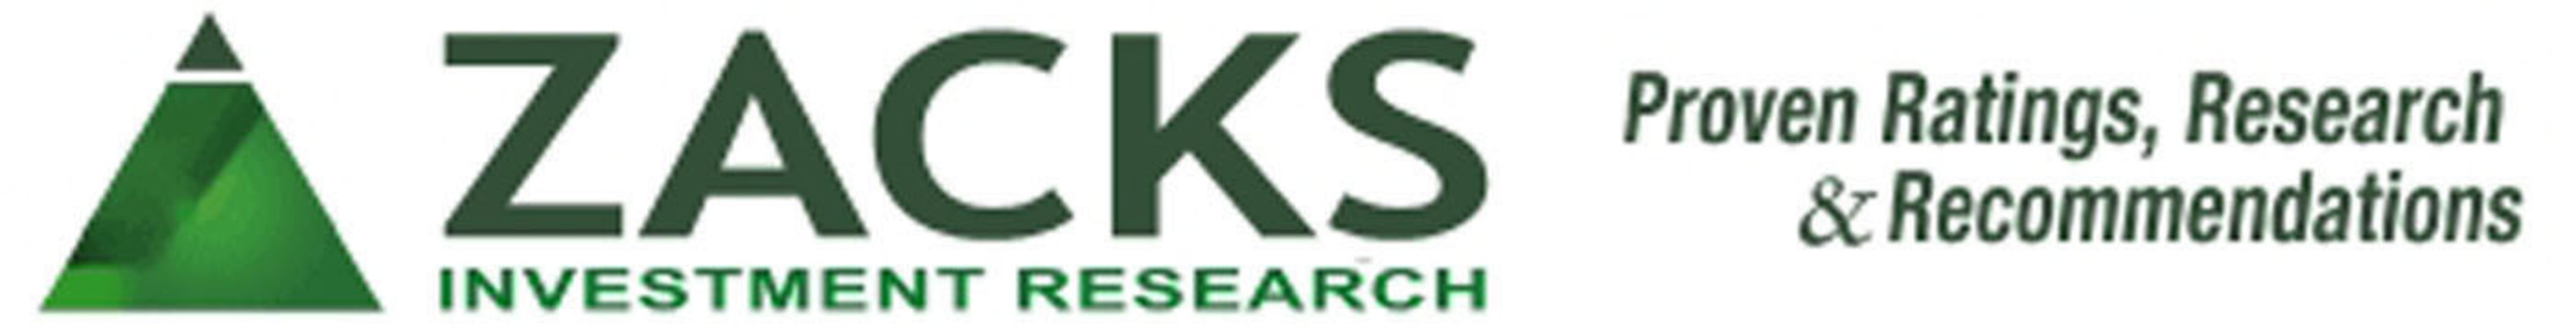 Zacks Investment Research, Inc., www.zacks.com.